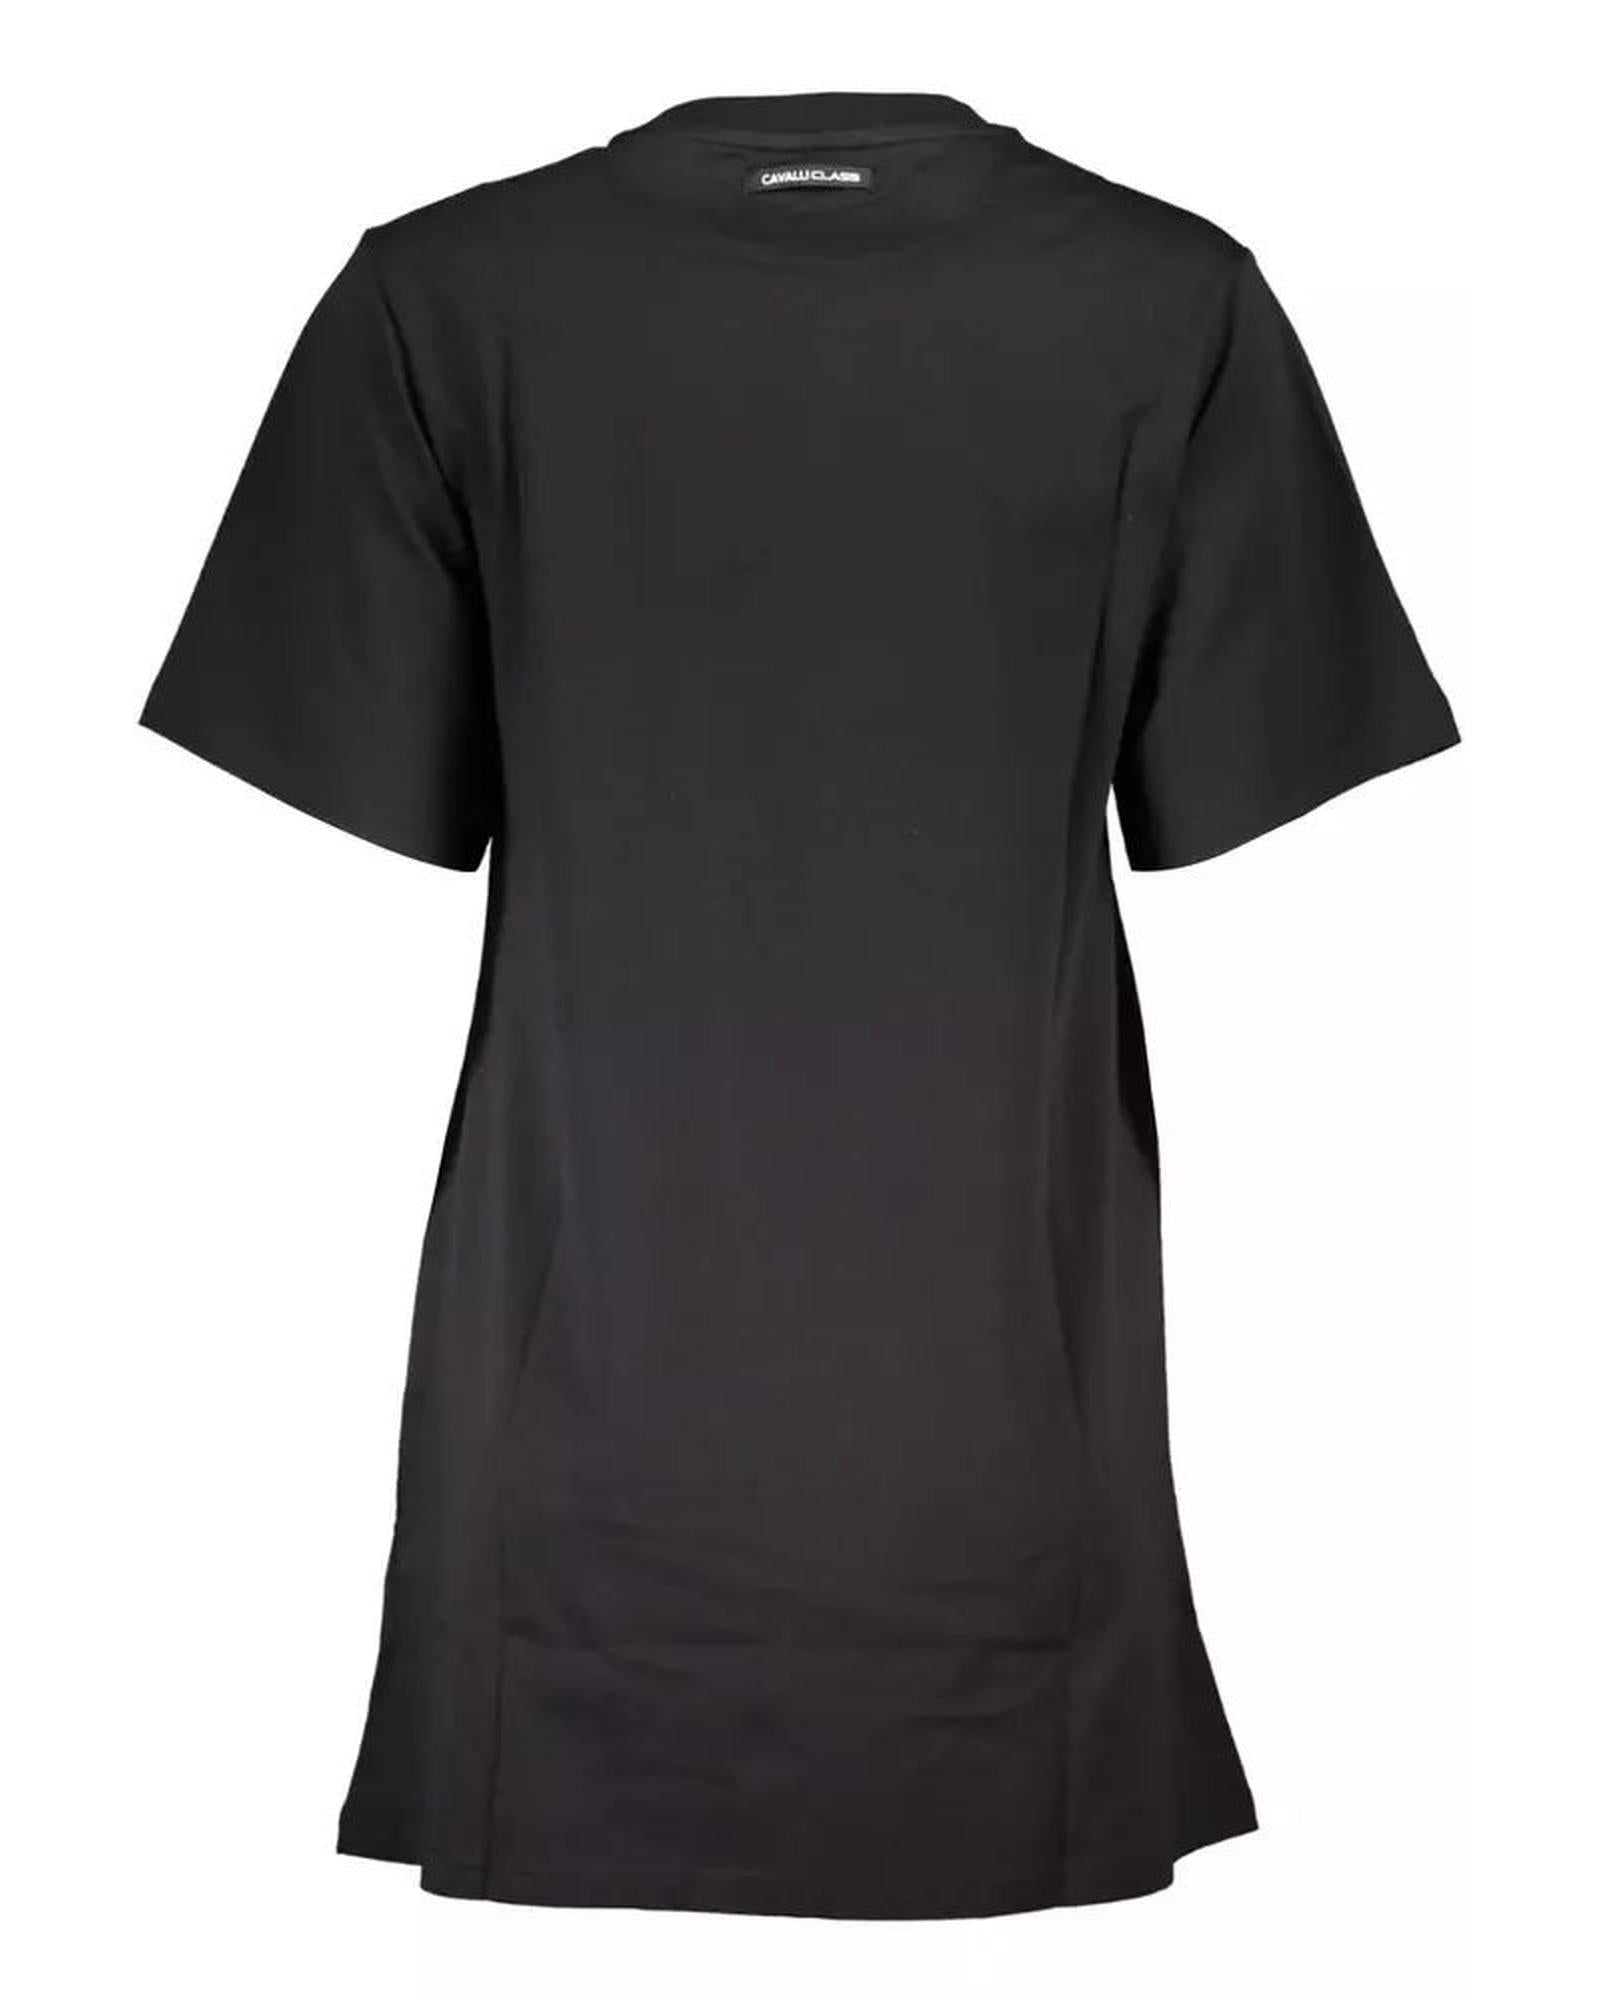 Women's Black Cotton Dress - L